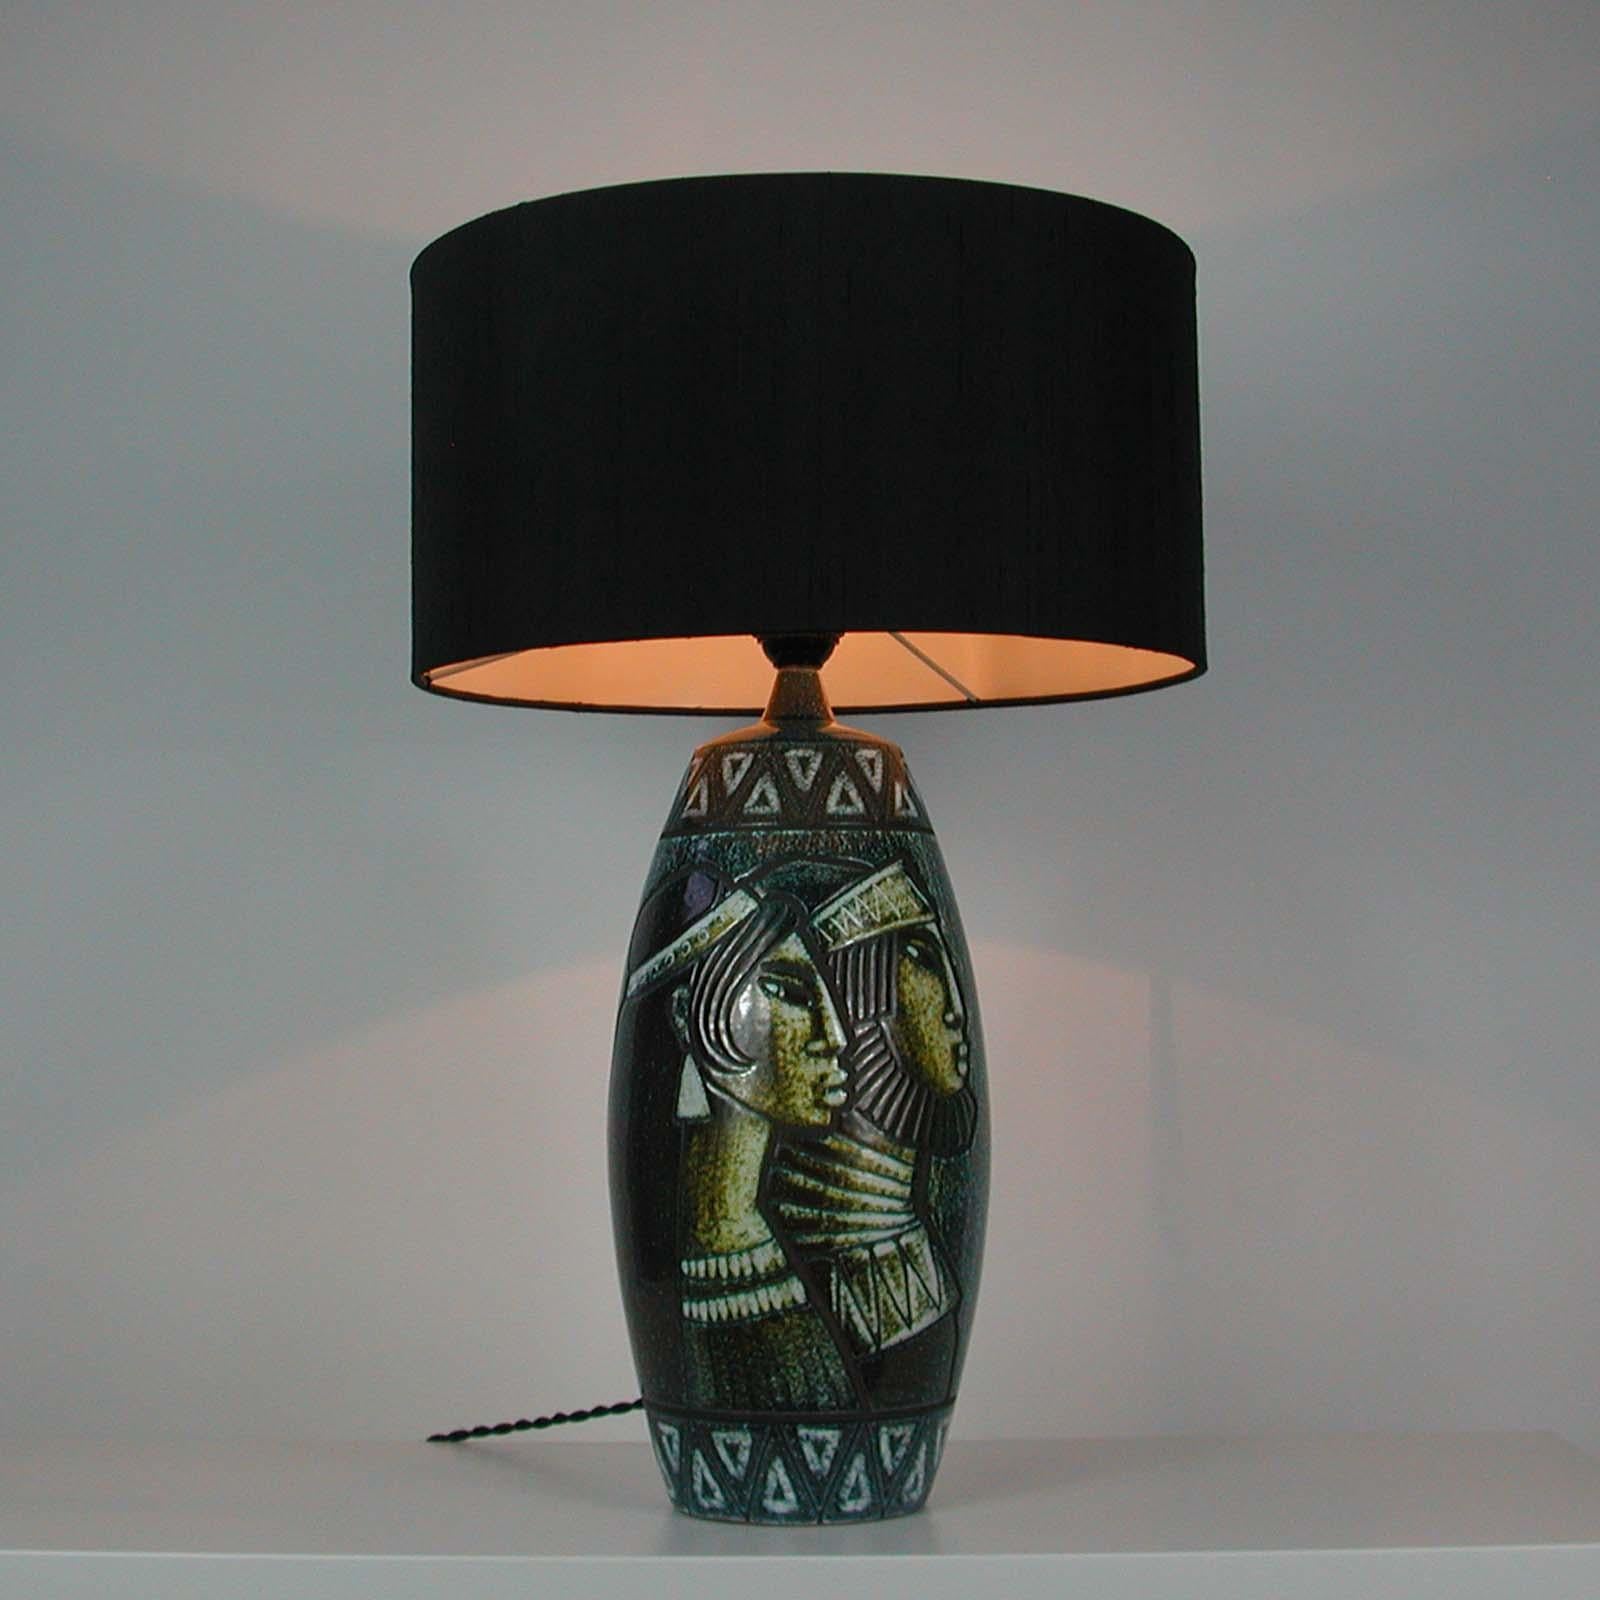 Midcentury Swedish Ceramic Table Lamp, Bonnie Rehnkvist for Falkenbergs, 1960s For Sale 5